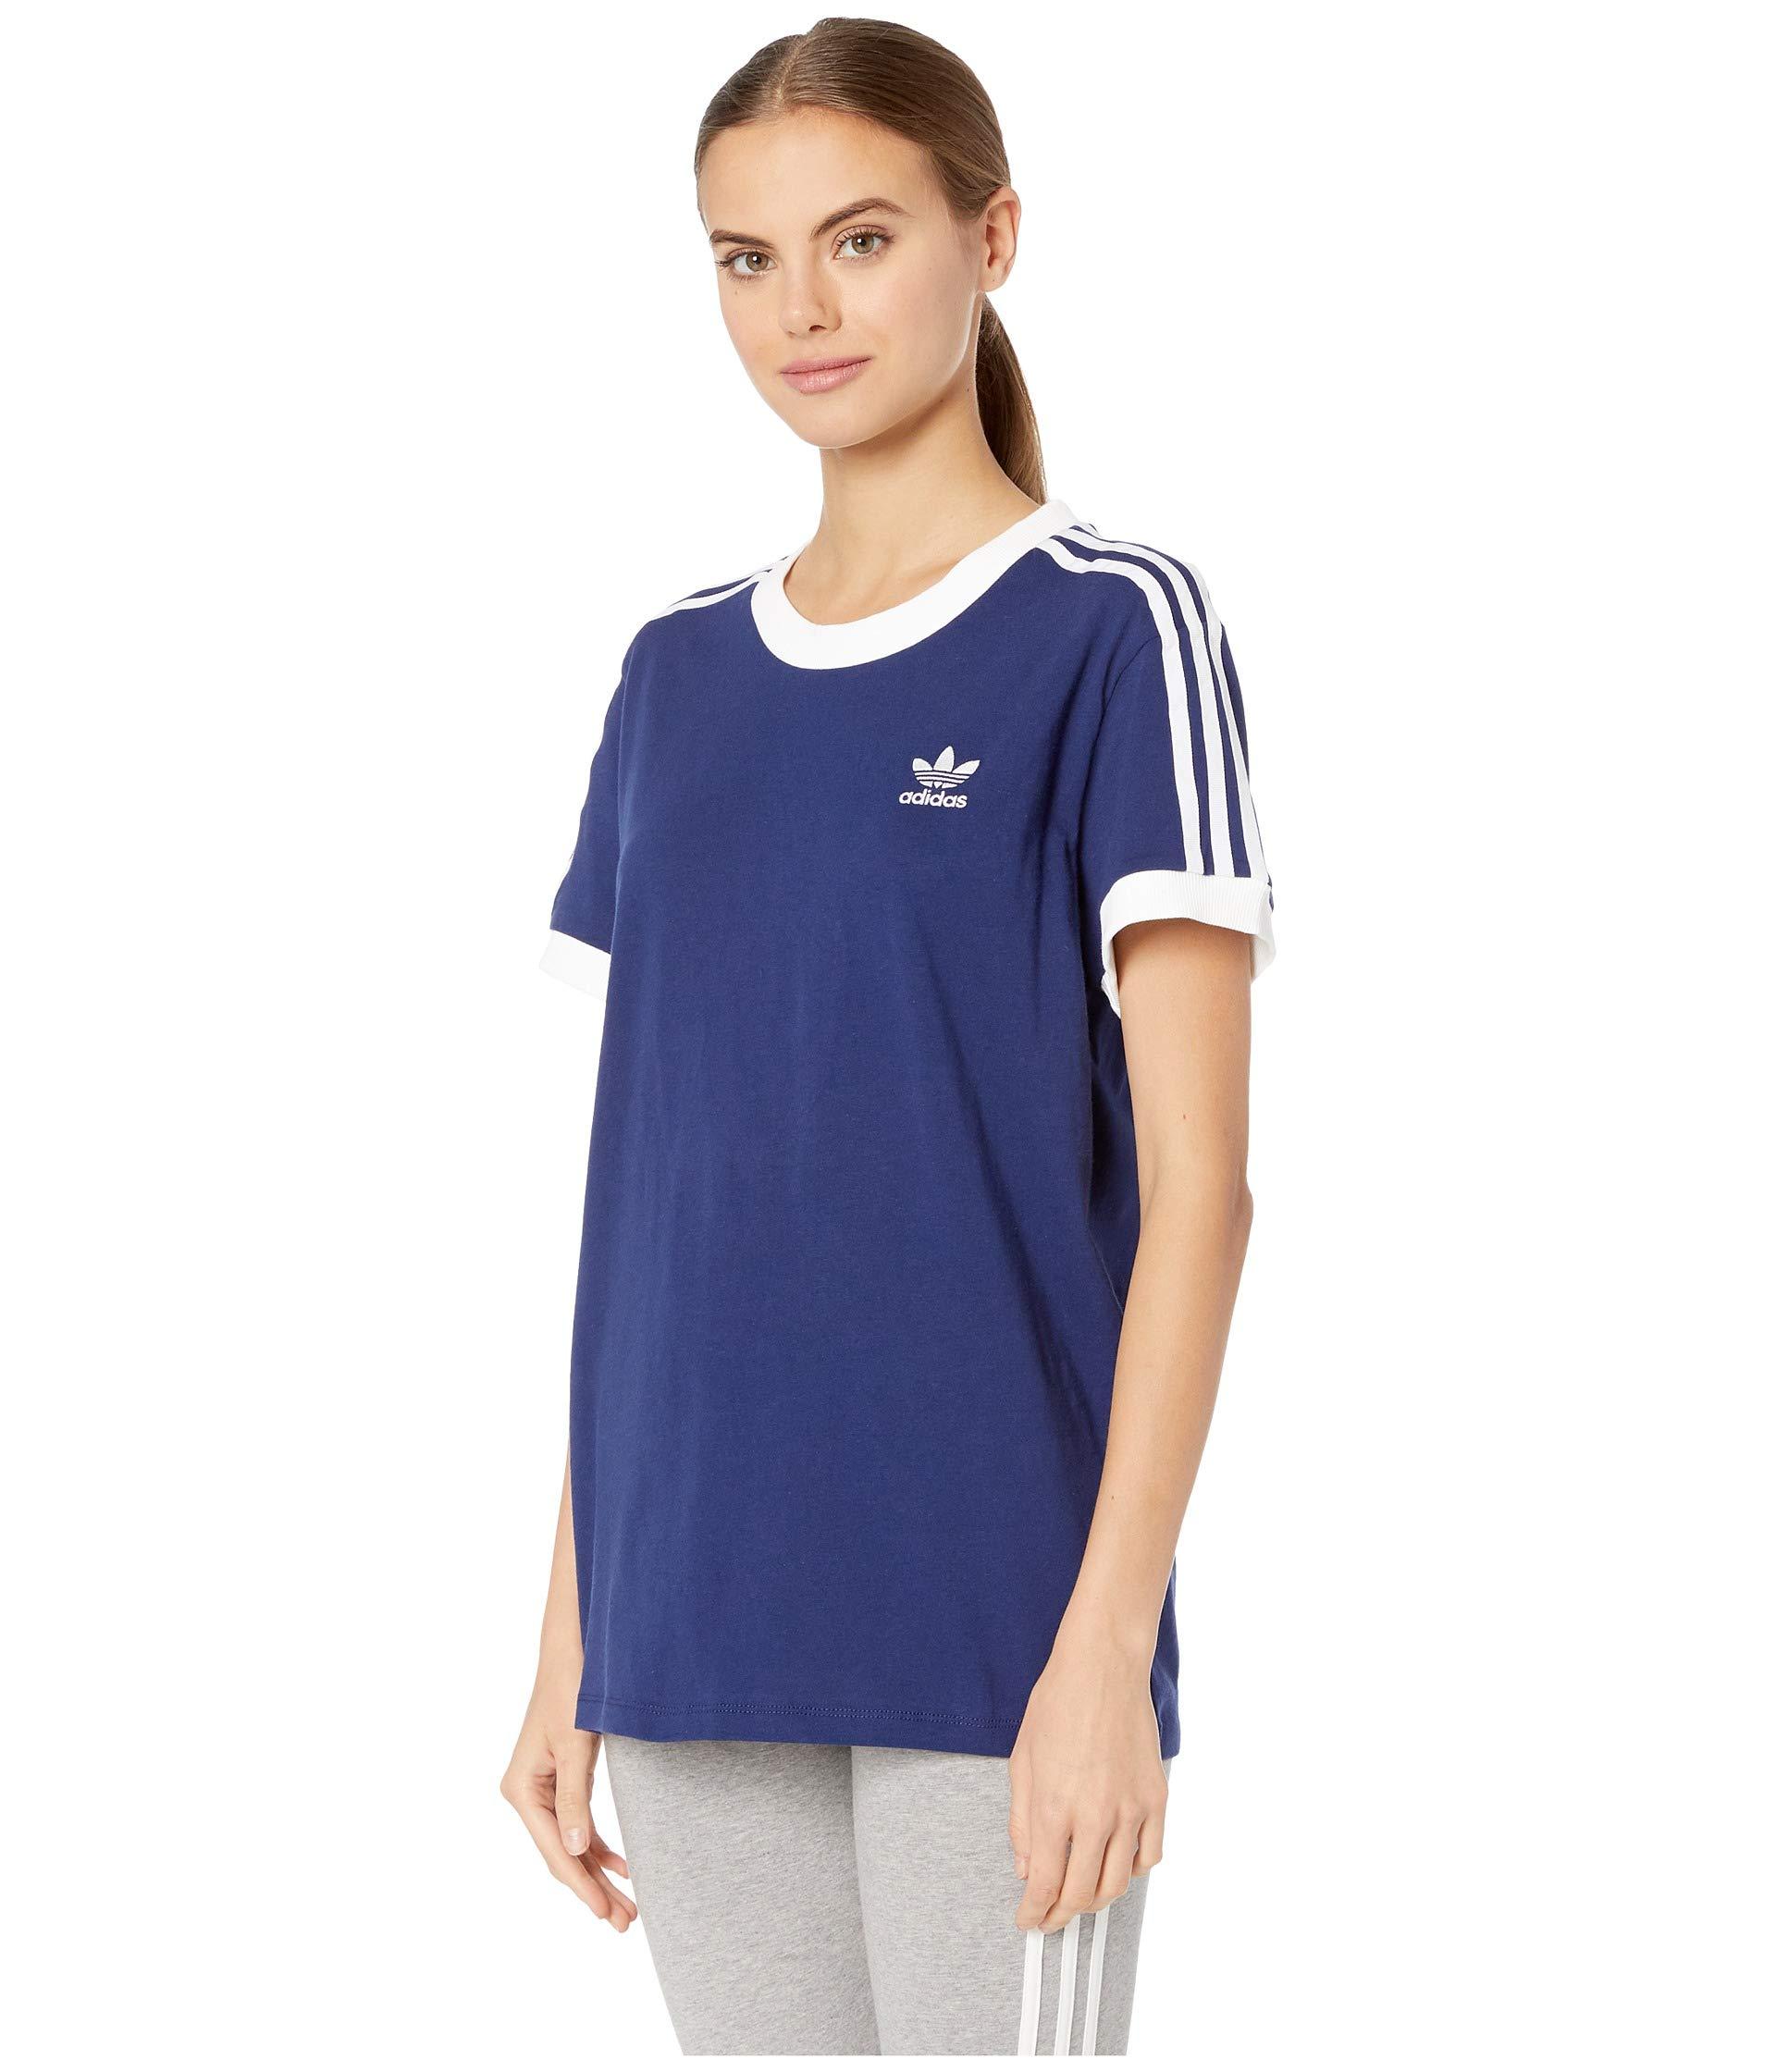 Adidas Originals Cotton 3 Stripes Tee Red Women S T Shirt In